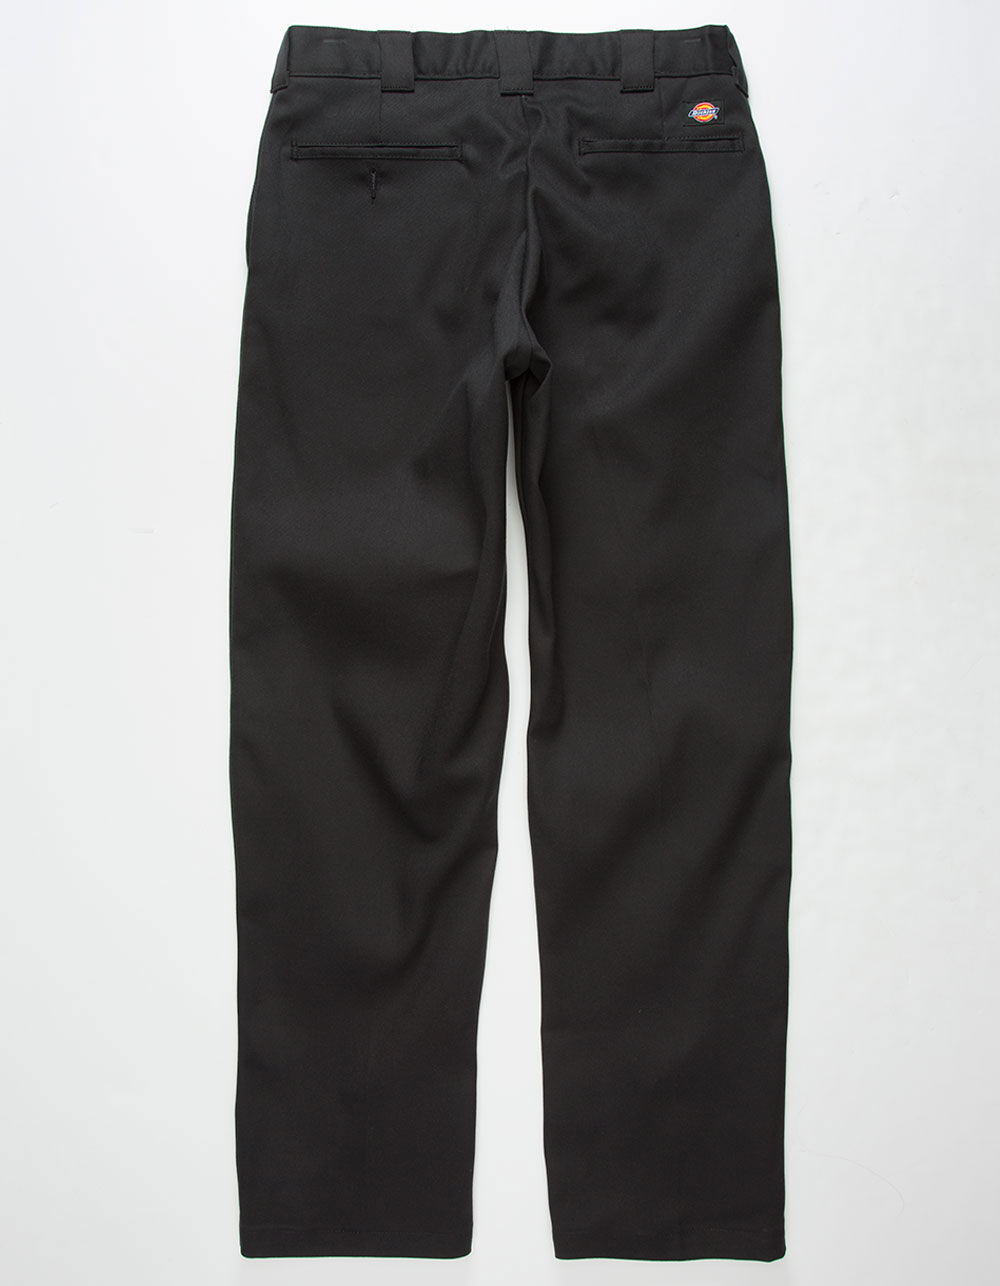 Shop Dickies 874 Original Pants In Black - Fast Shipping & Easy